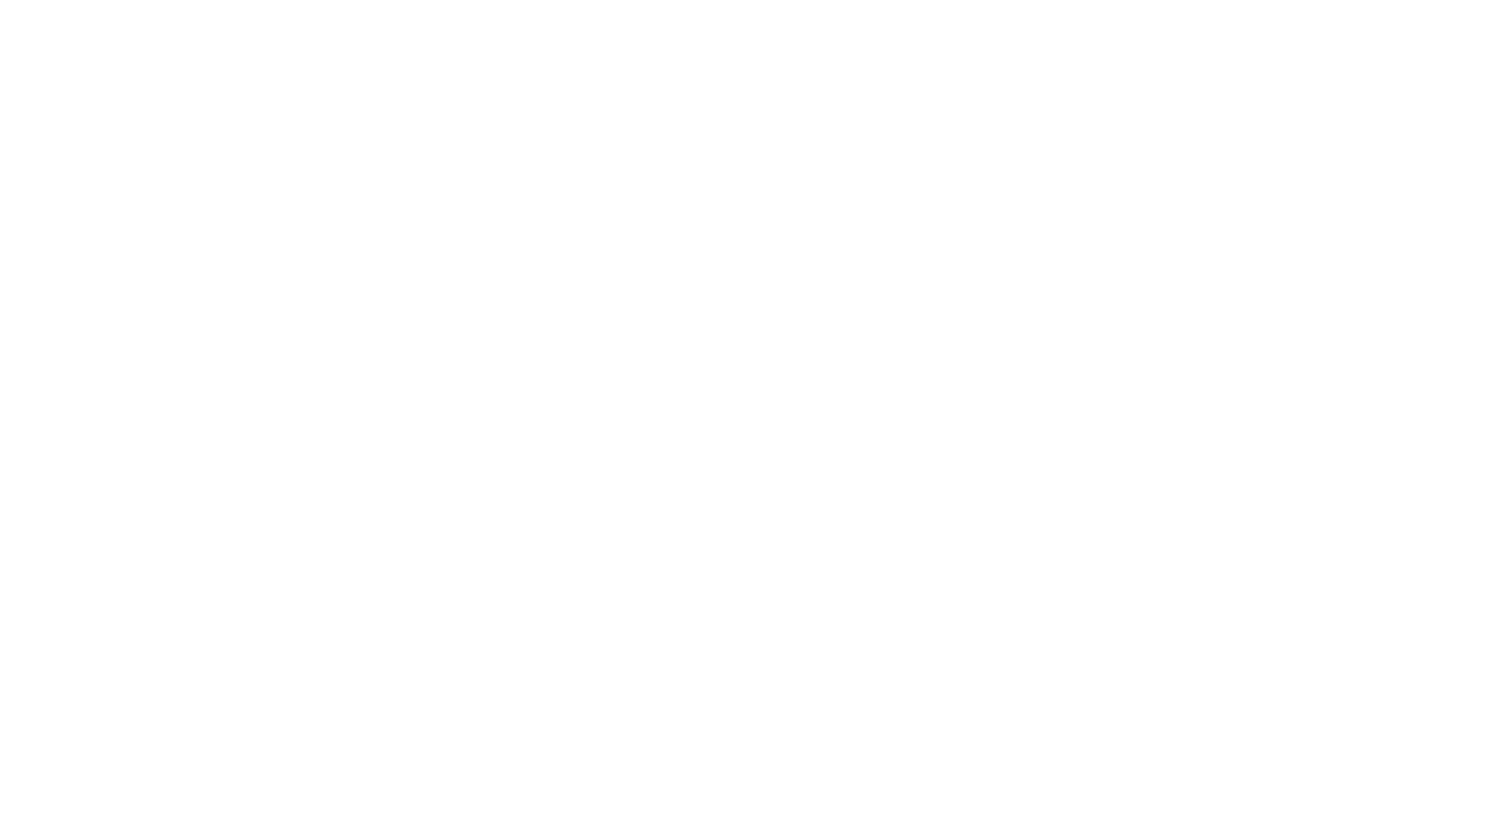 Joana Gutierrez Ganeshappa D.D.S.